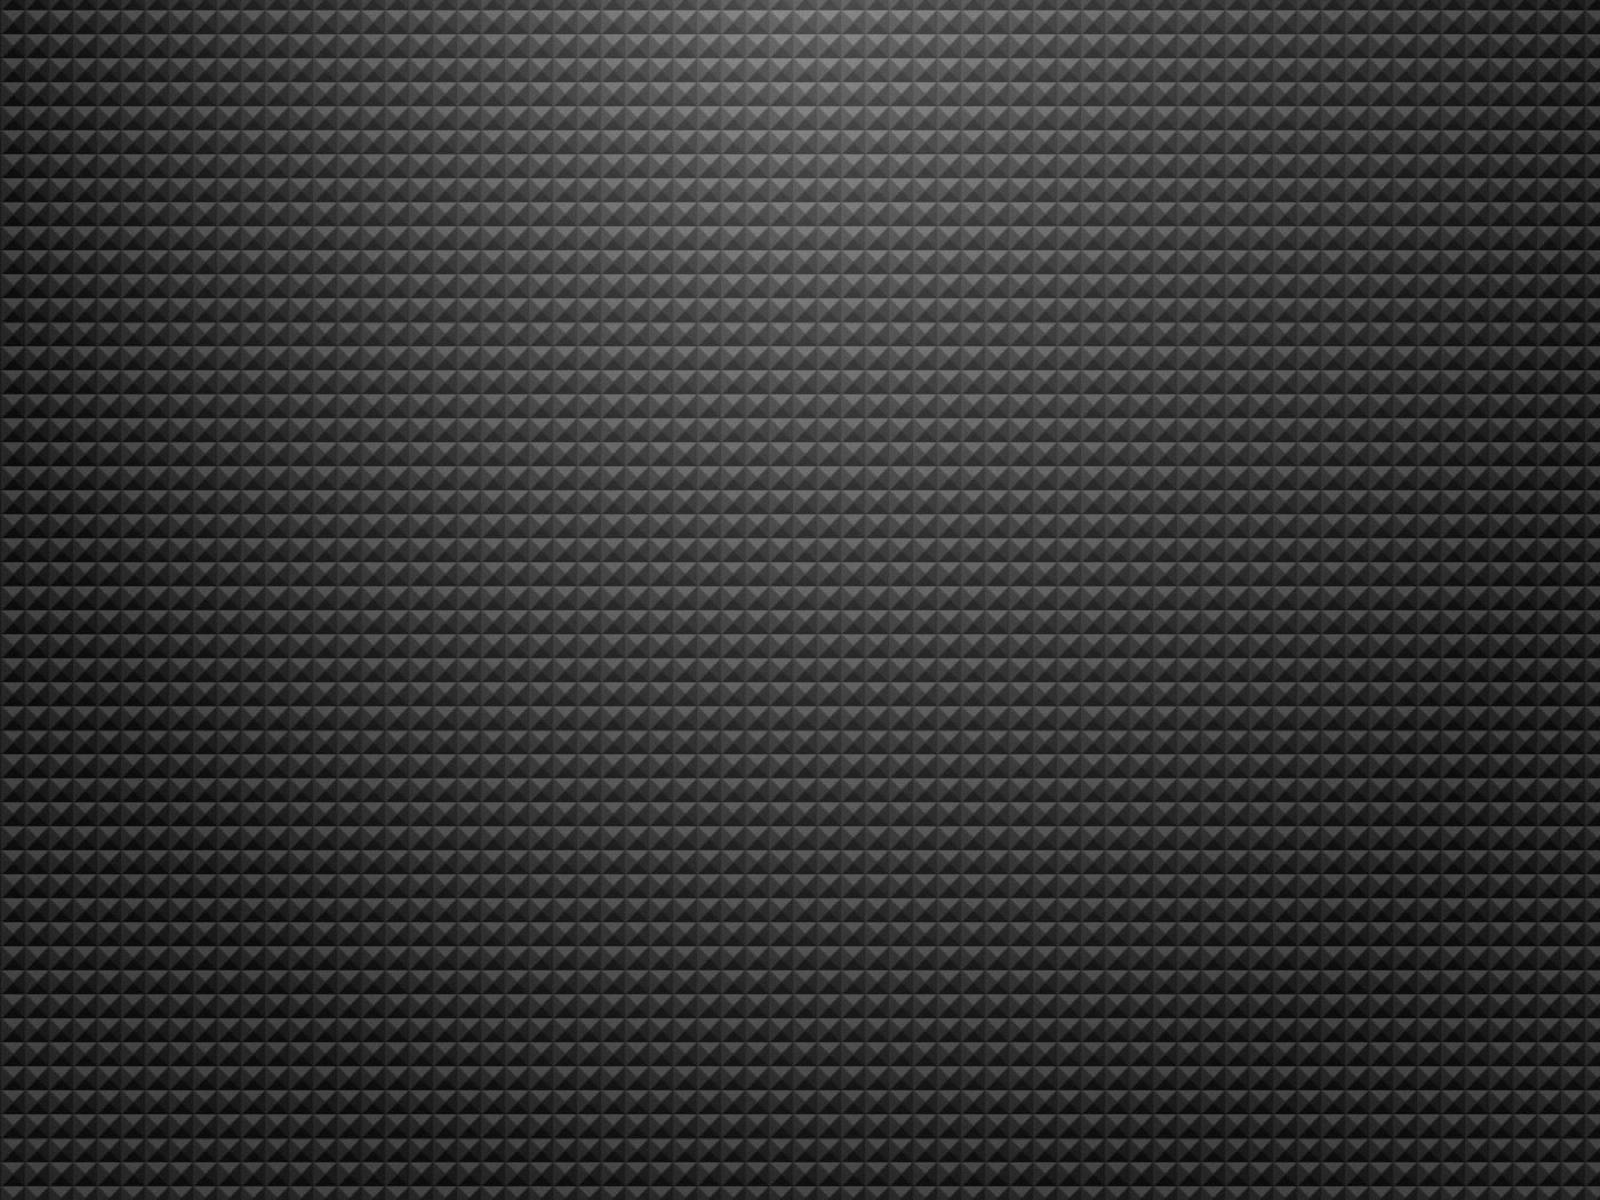 Desktop Wallpaper Google Nexus 1024 X 768 119 Kb Jpeg